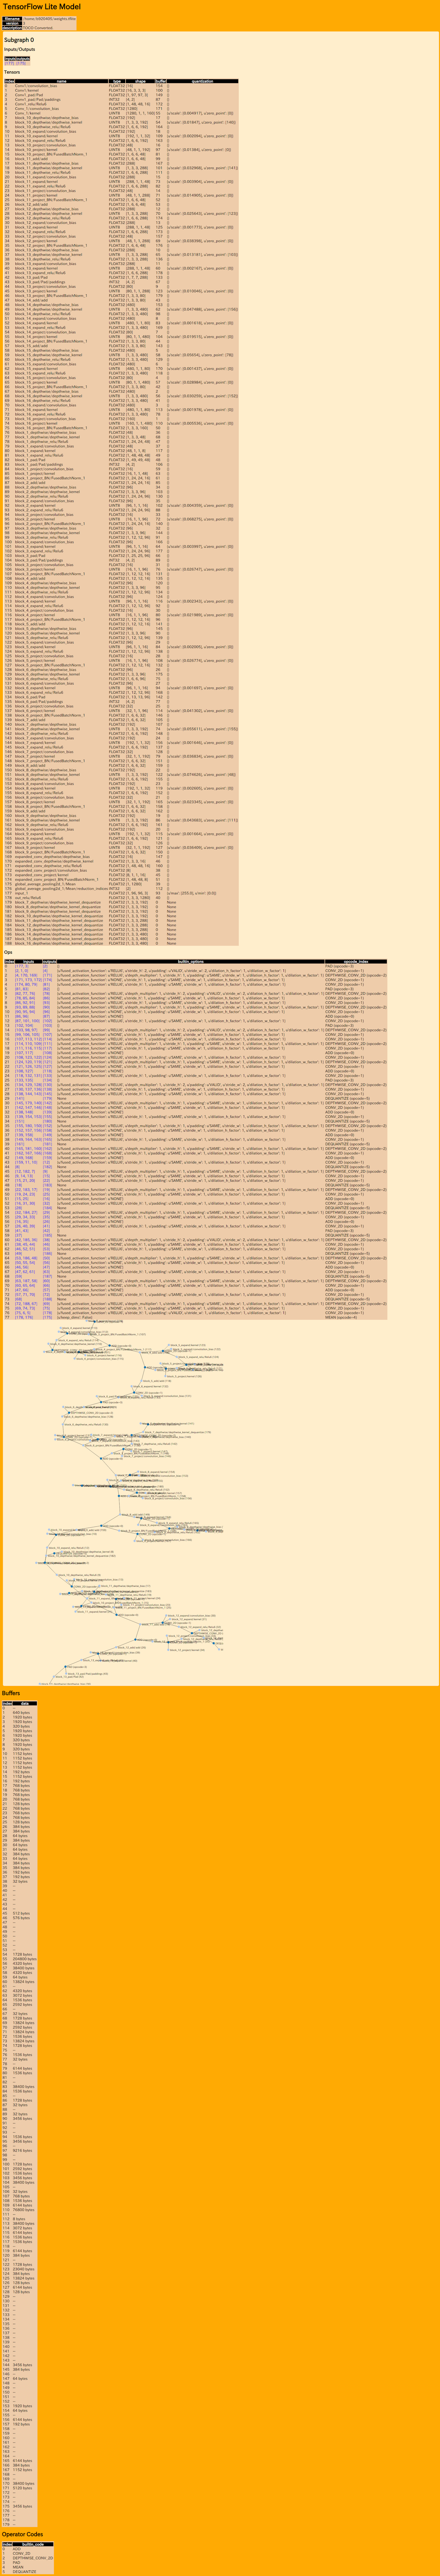 screencapture-file-home-b920405-cache-bazel-_bazel_root-1b482cb833d8dba716c683473b9bb6cb-execroot-org_tensorflow-bazel-out-k8-opt-bin-tensorflow-contrib-lite-tools-visualize-runfiles-org_tensorflow-model_viz-html-2019-03-17-14_31_15.png